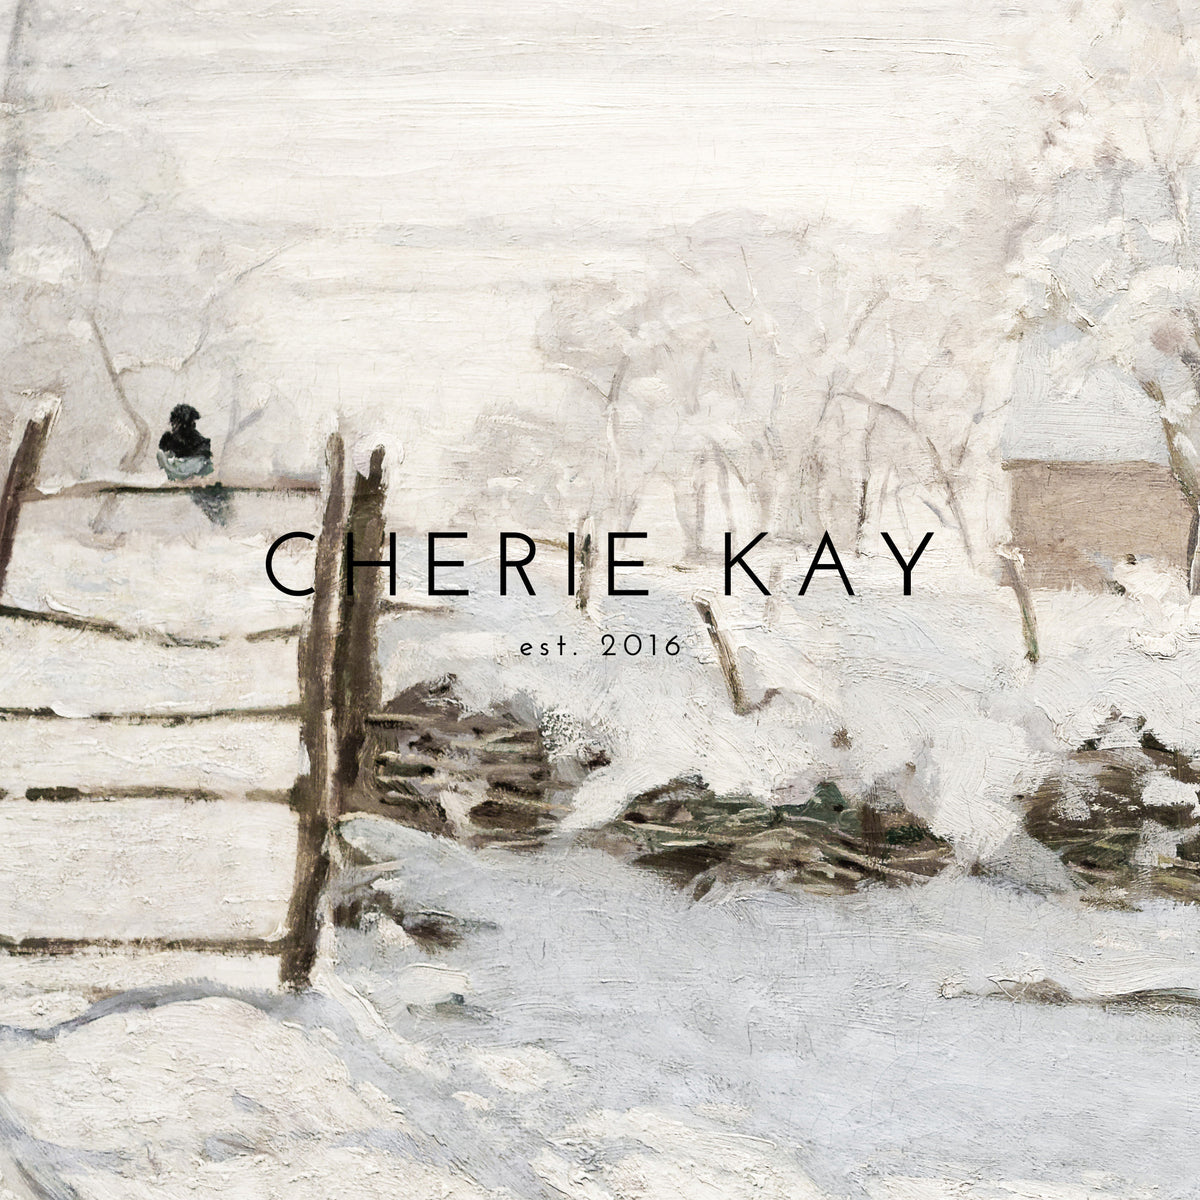 Winter Landscape Painting | Snowy Landscape | Framed Wall Art | Winter Home Decor | Winter Wonderland | W61